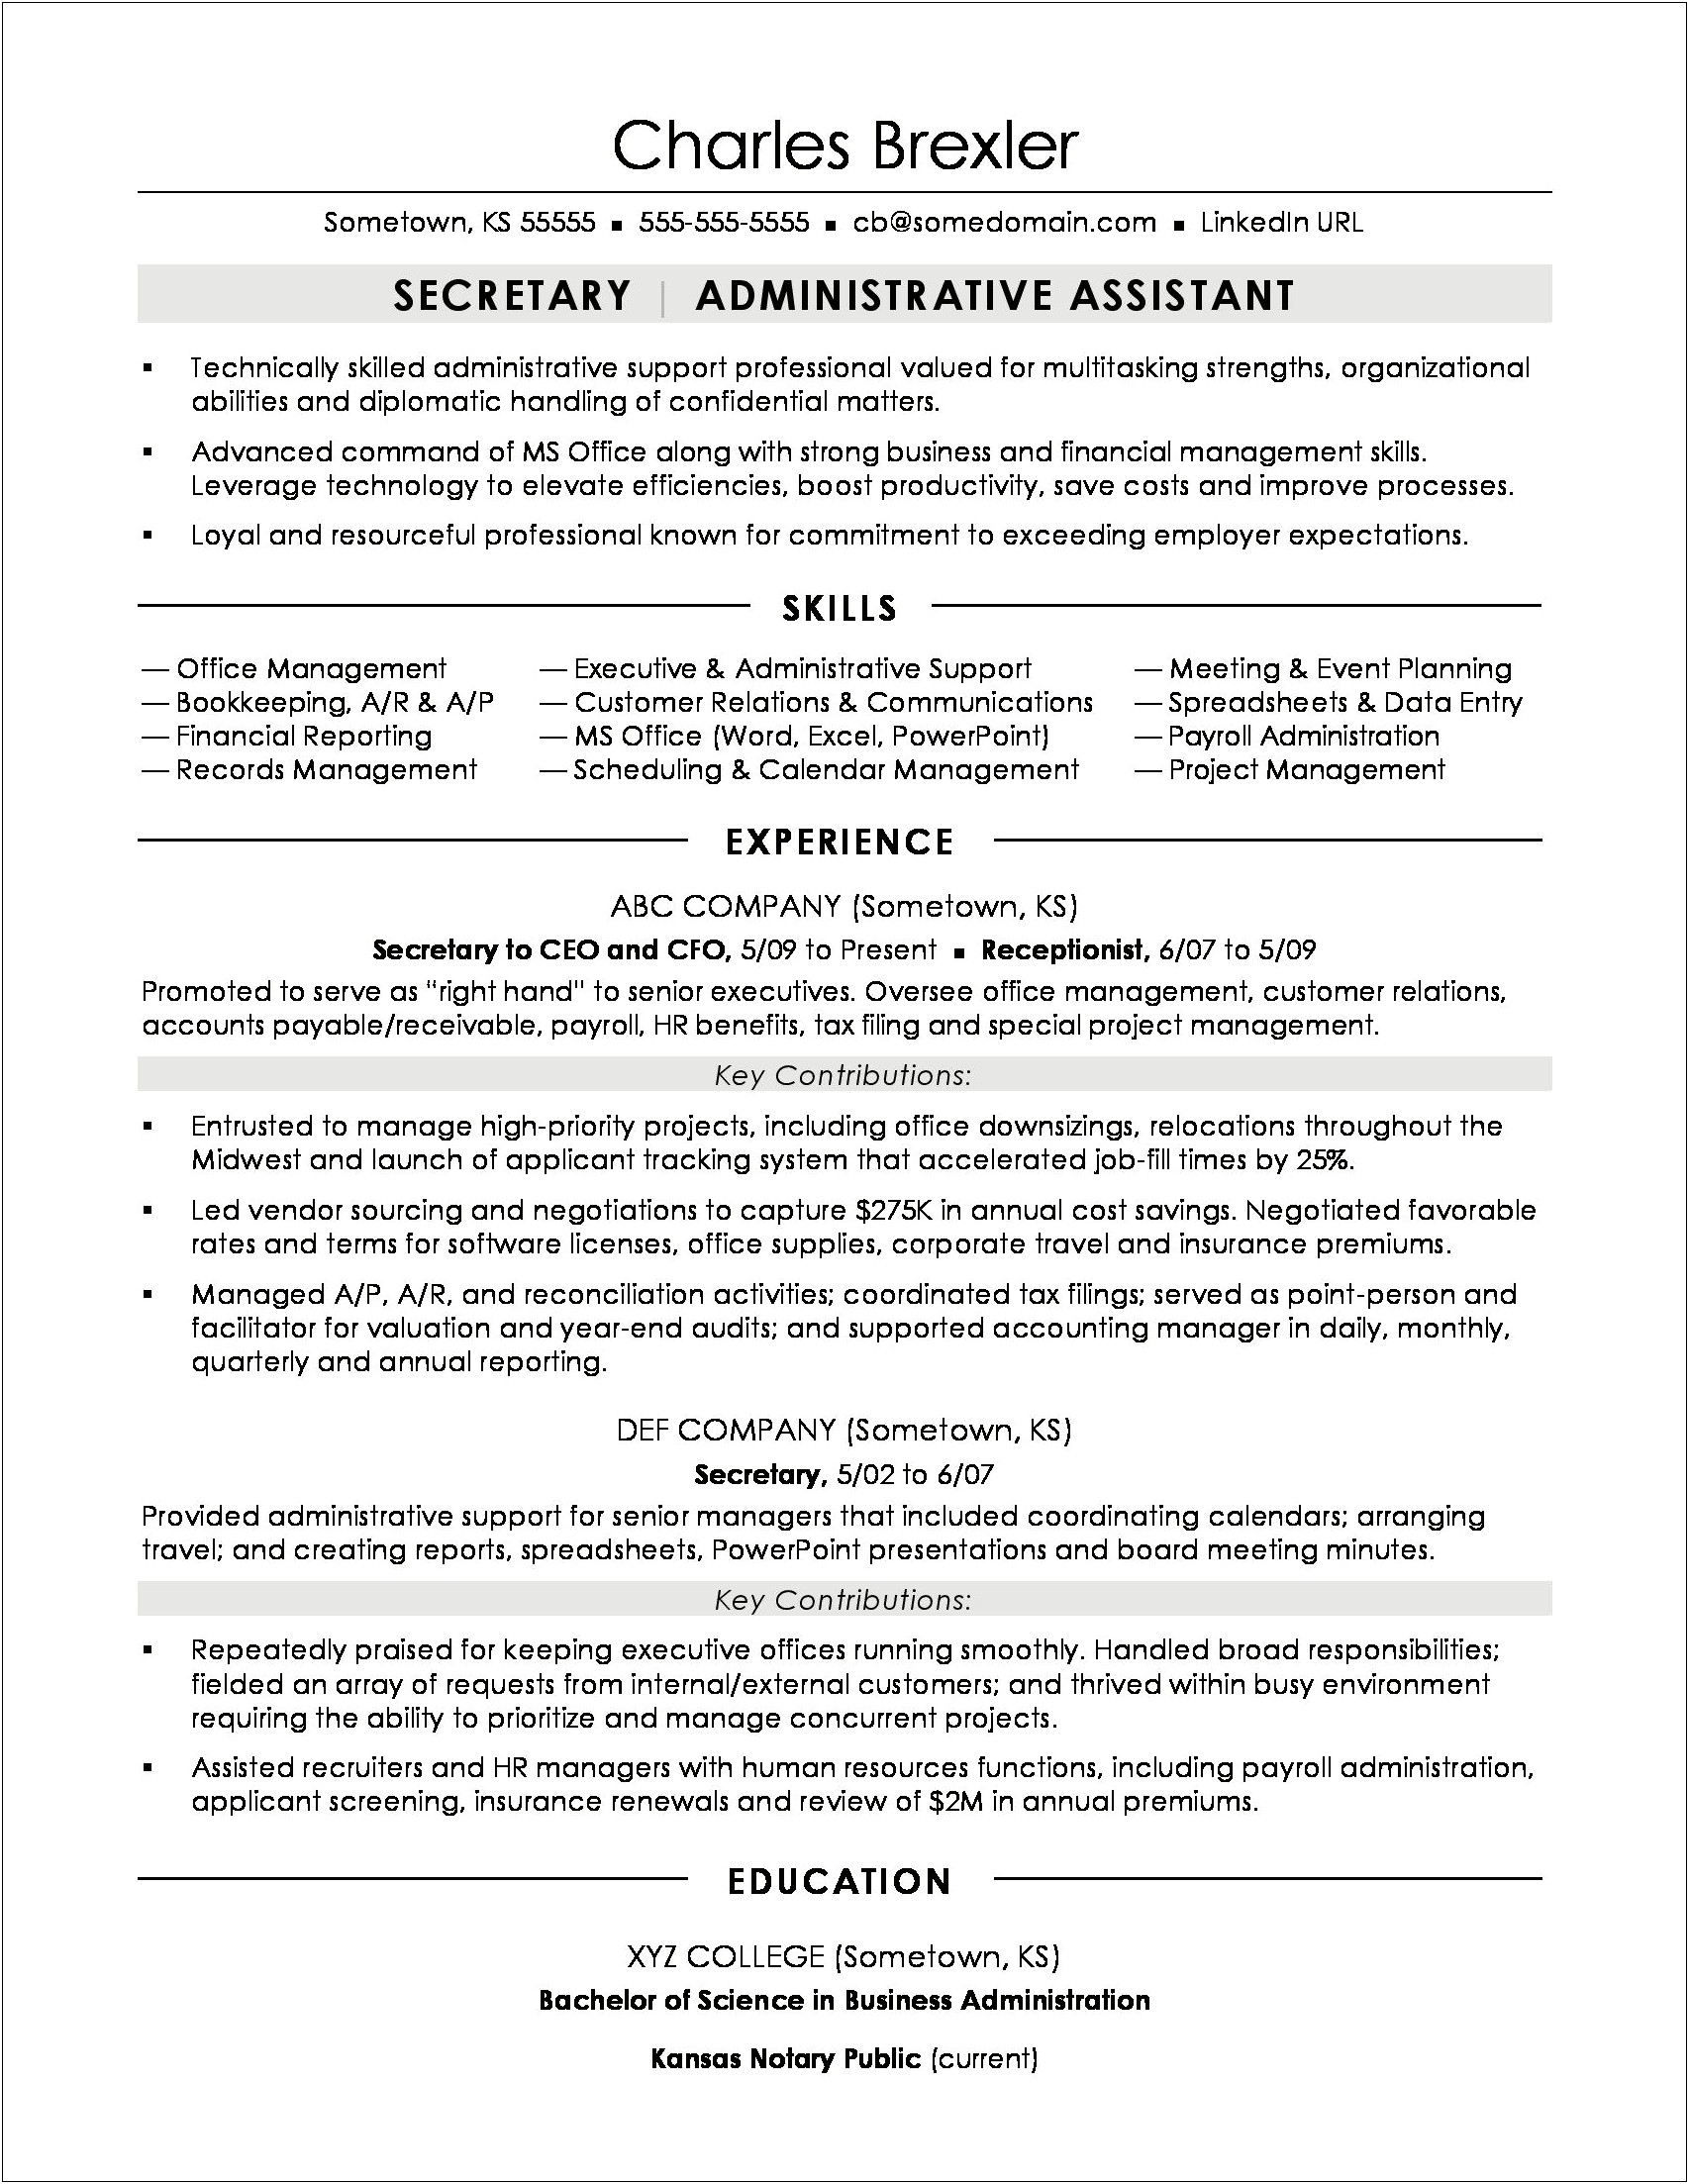 Nursing Resume Objective Examples Monster.com